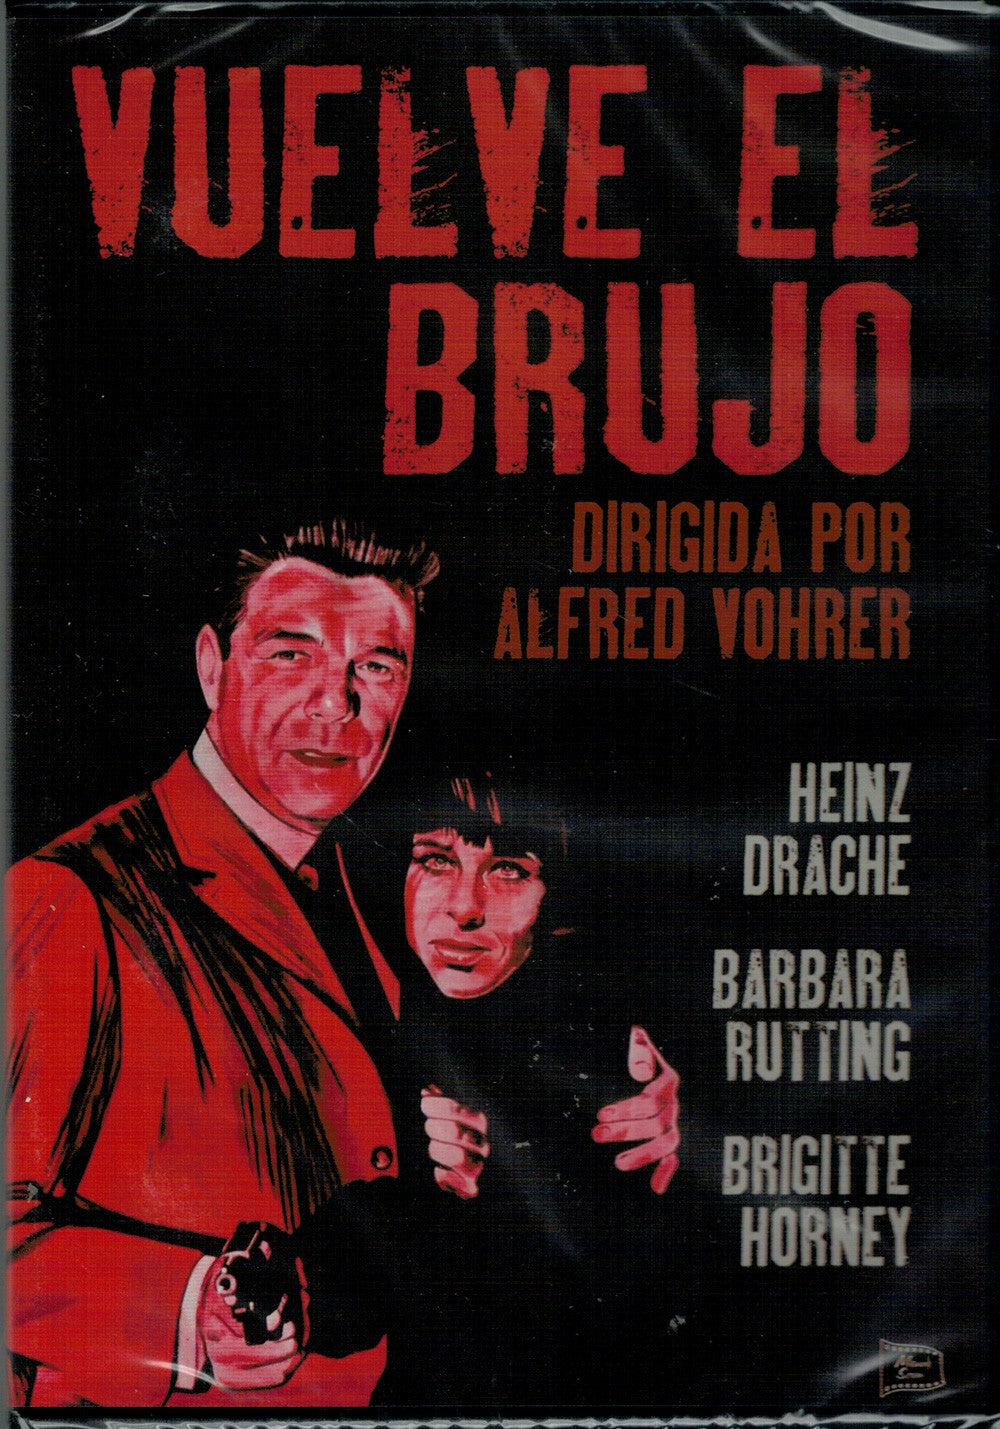 Vuelve el brujo  (Again the Ringer) (DVD Nuevo)